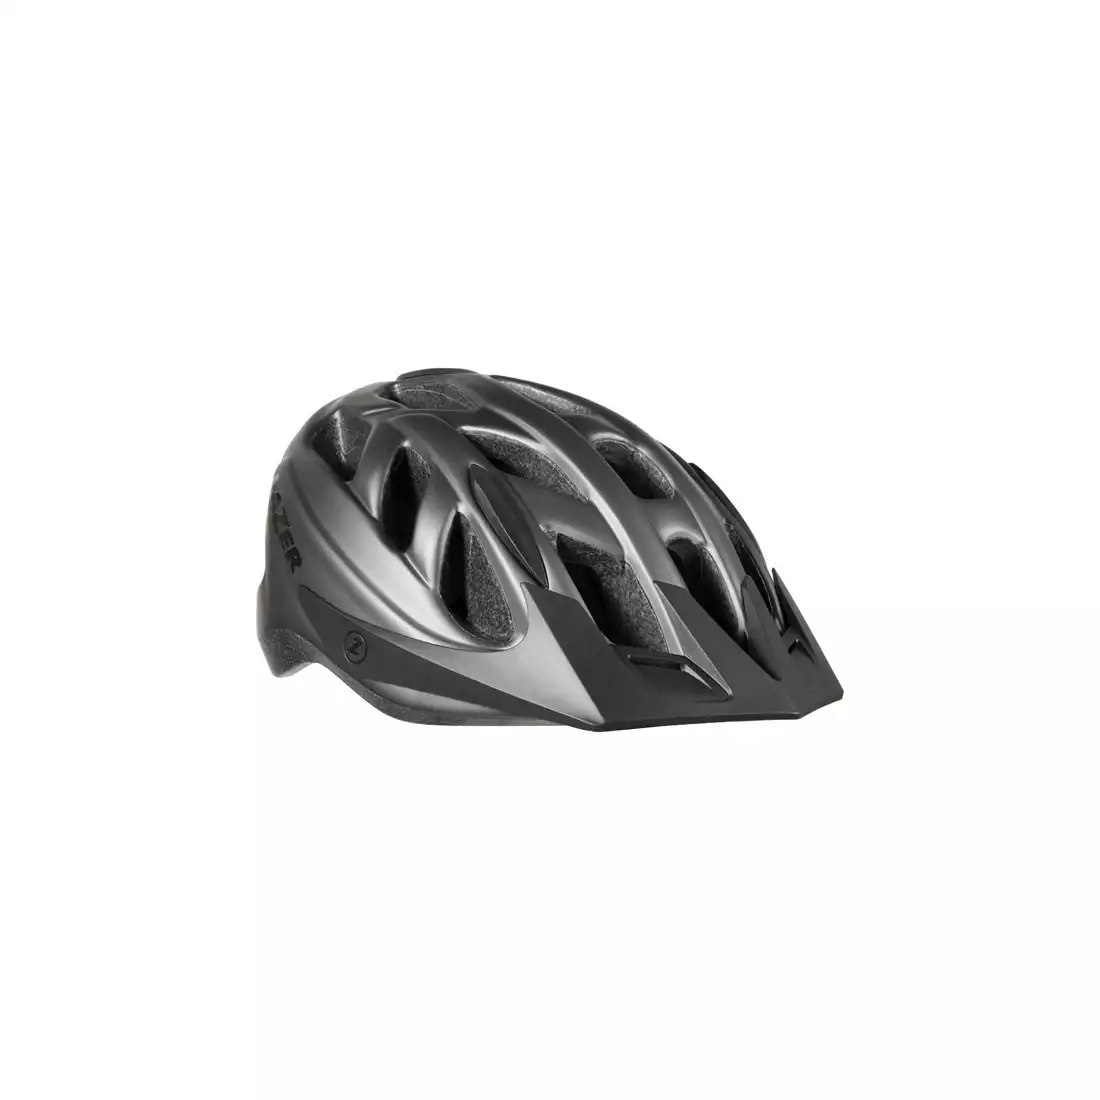 LAZER - CYCLONE kask rowerowy MTB, kolor: grey matt